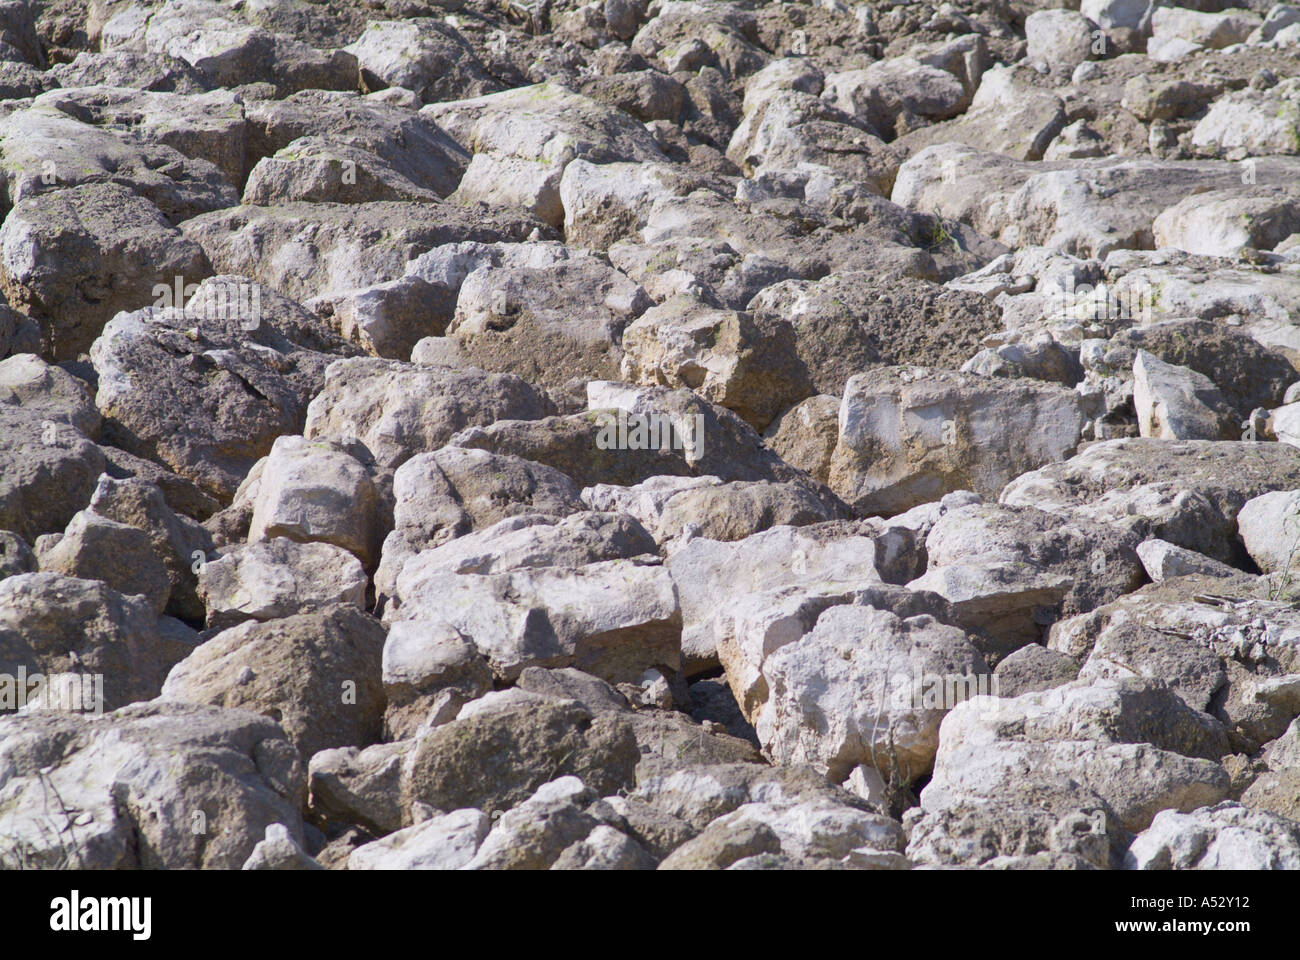 Origines les roches rugueuses textures pierres rocheuses Banque D'Images